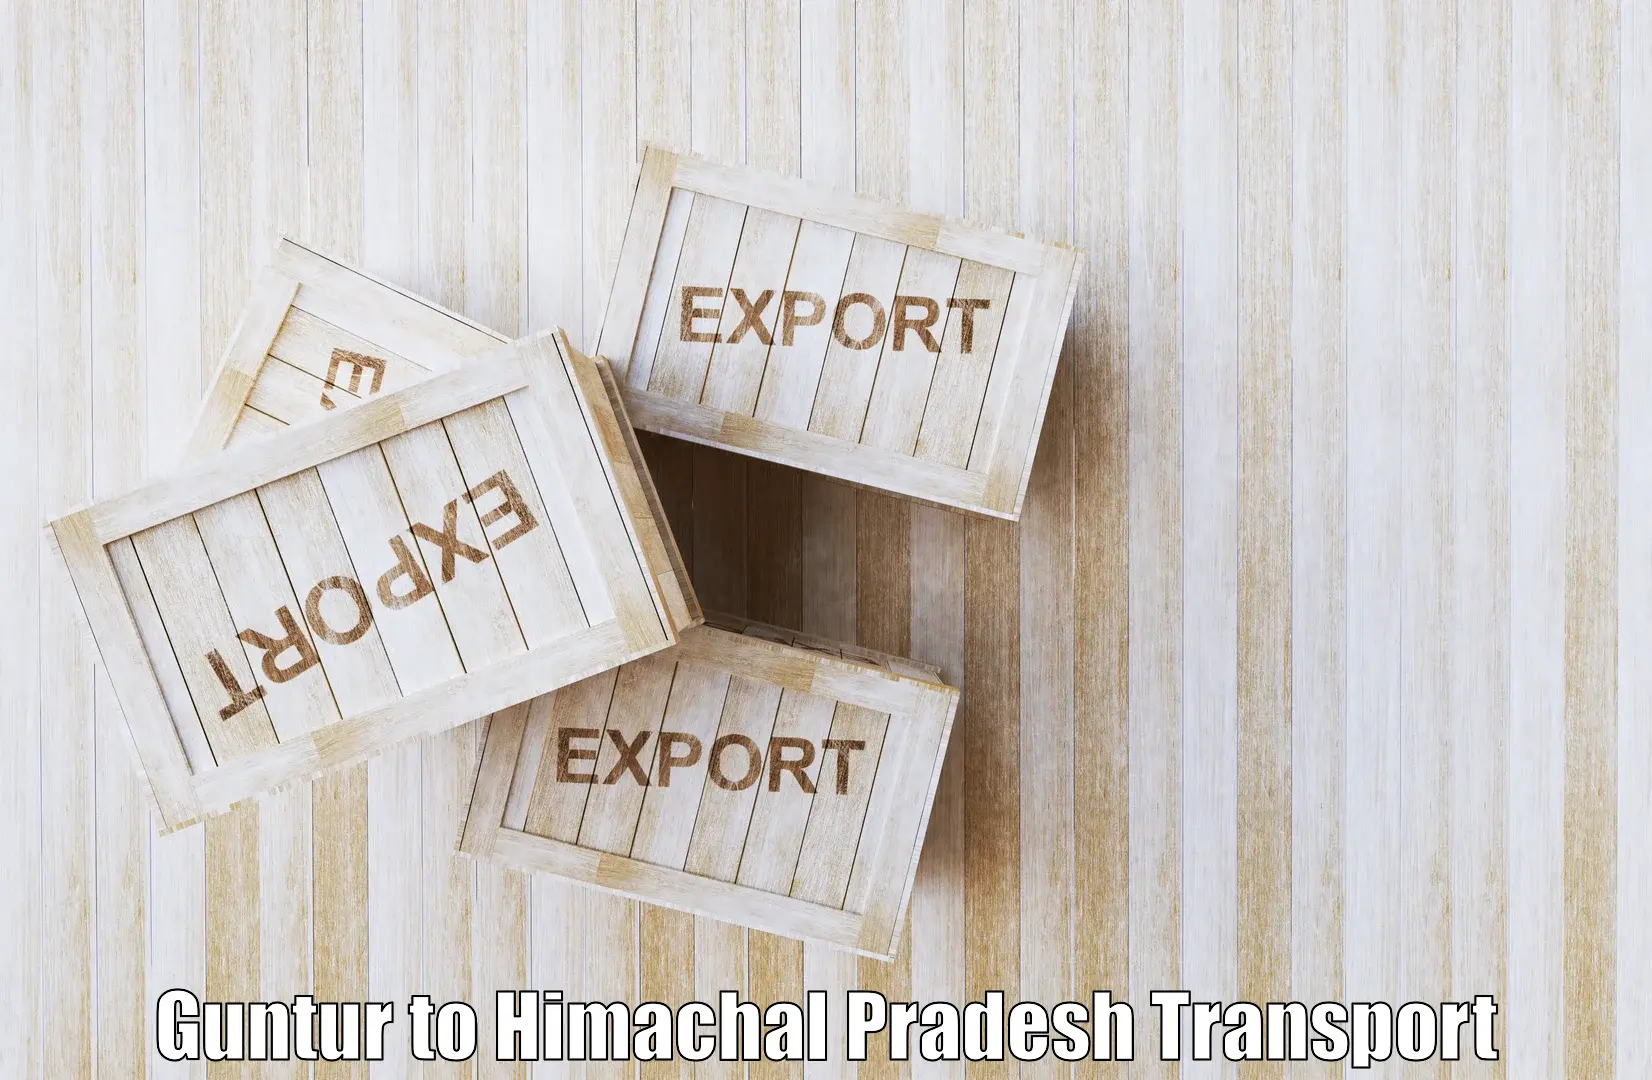 Best transport services in India Guntur to Palampur